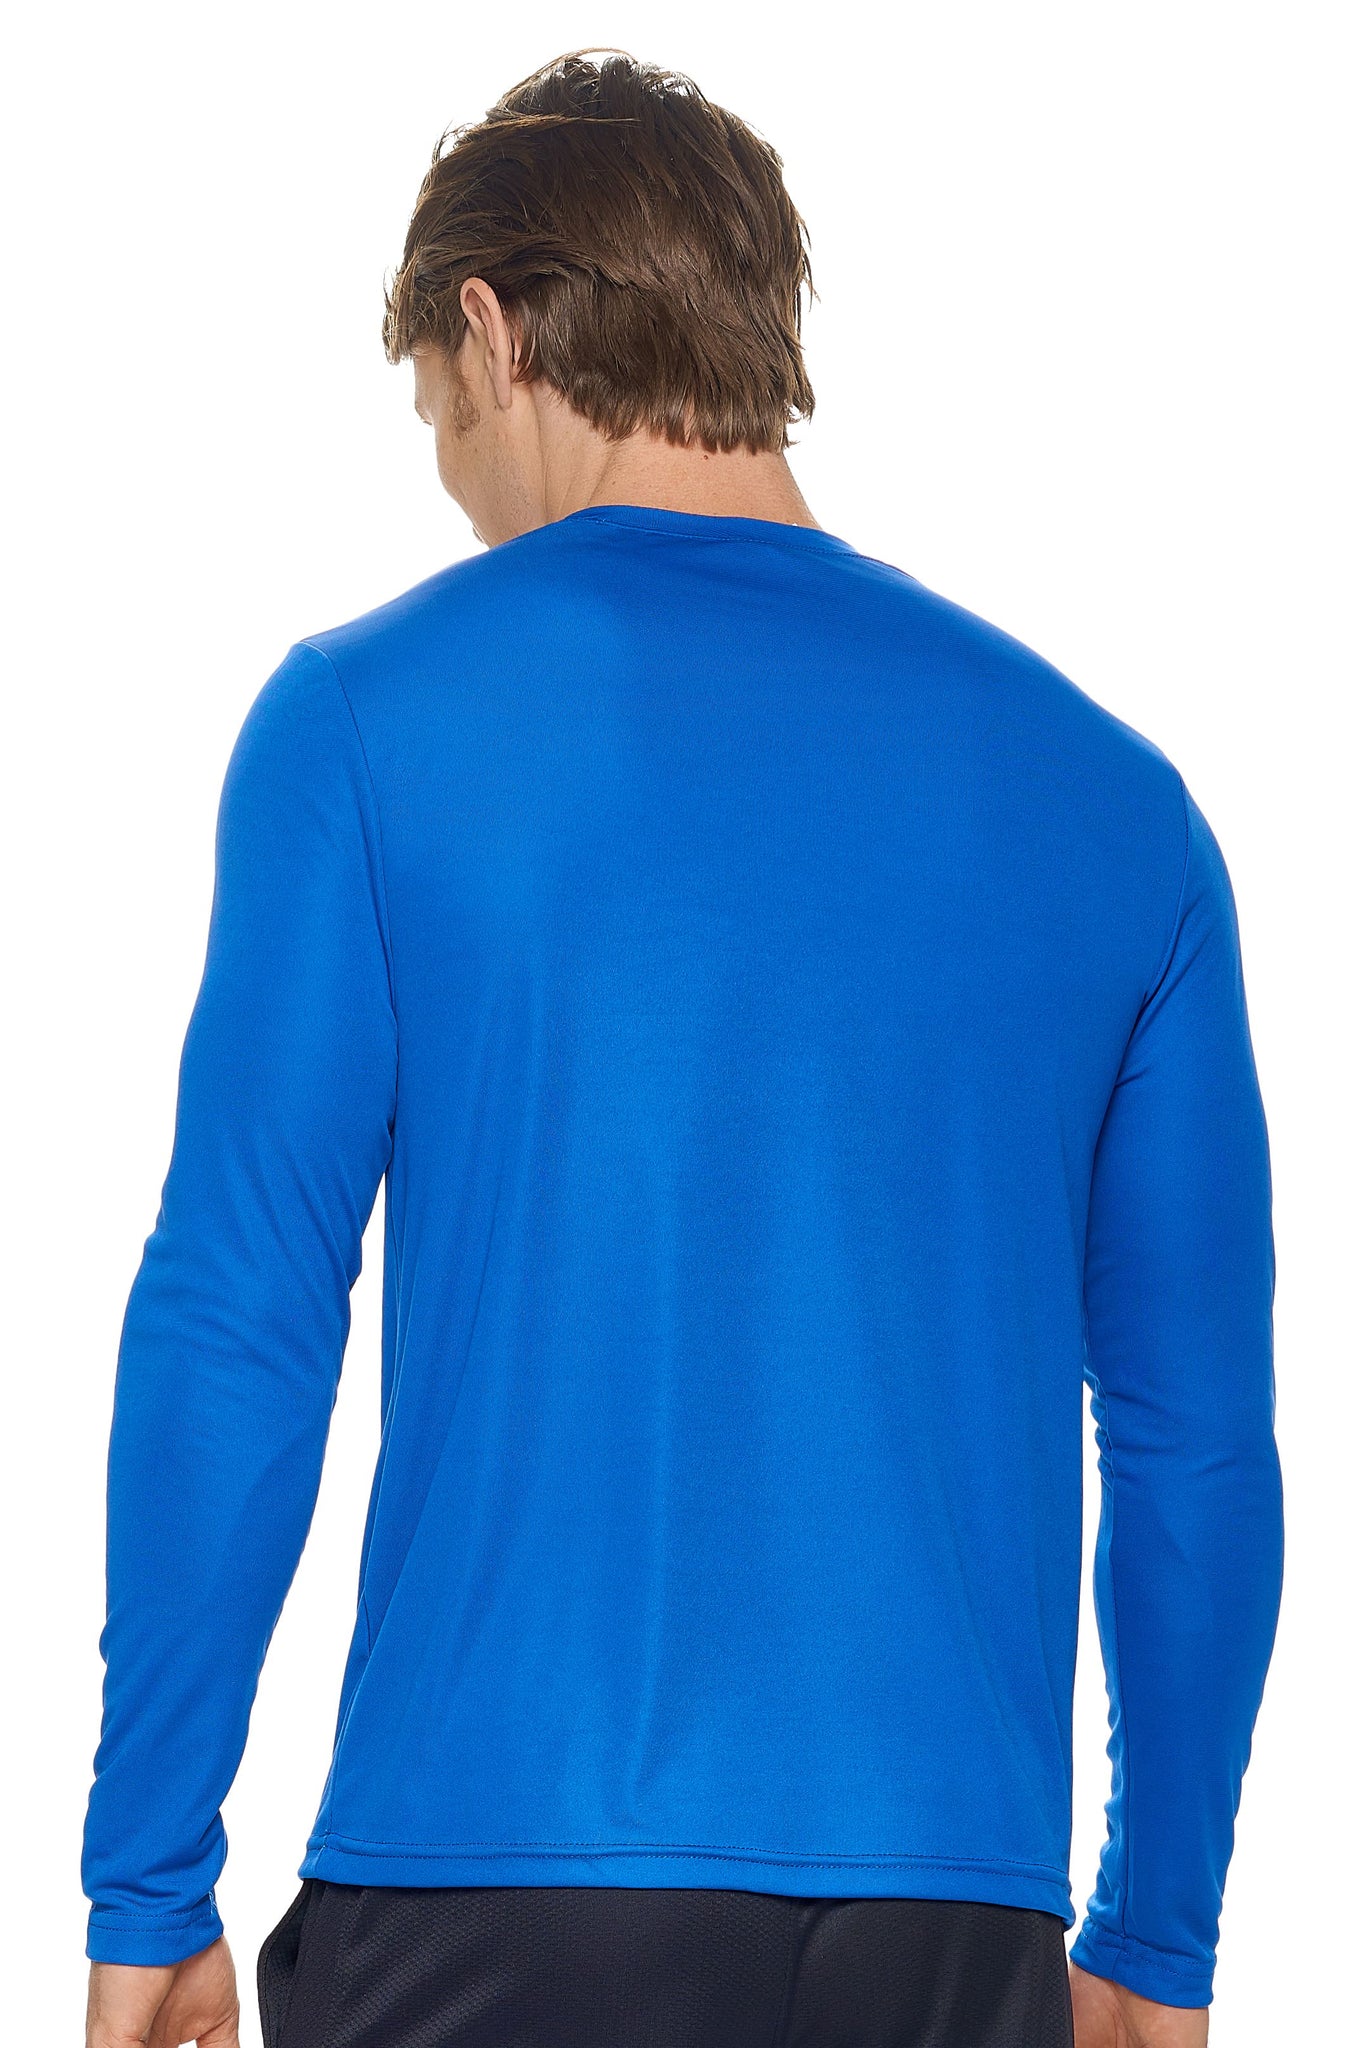 Expert Brand Royal Blue pk MaX™ Crewneck Long Sleeve Expert Tee Image 3#royal-blue